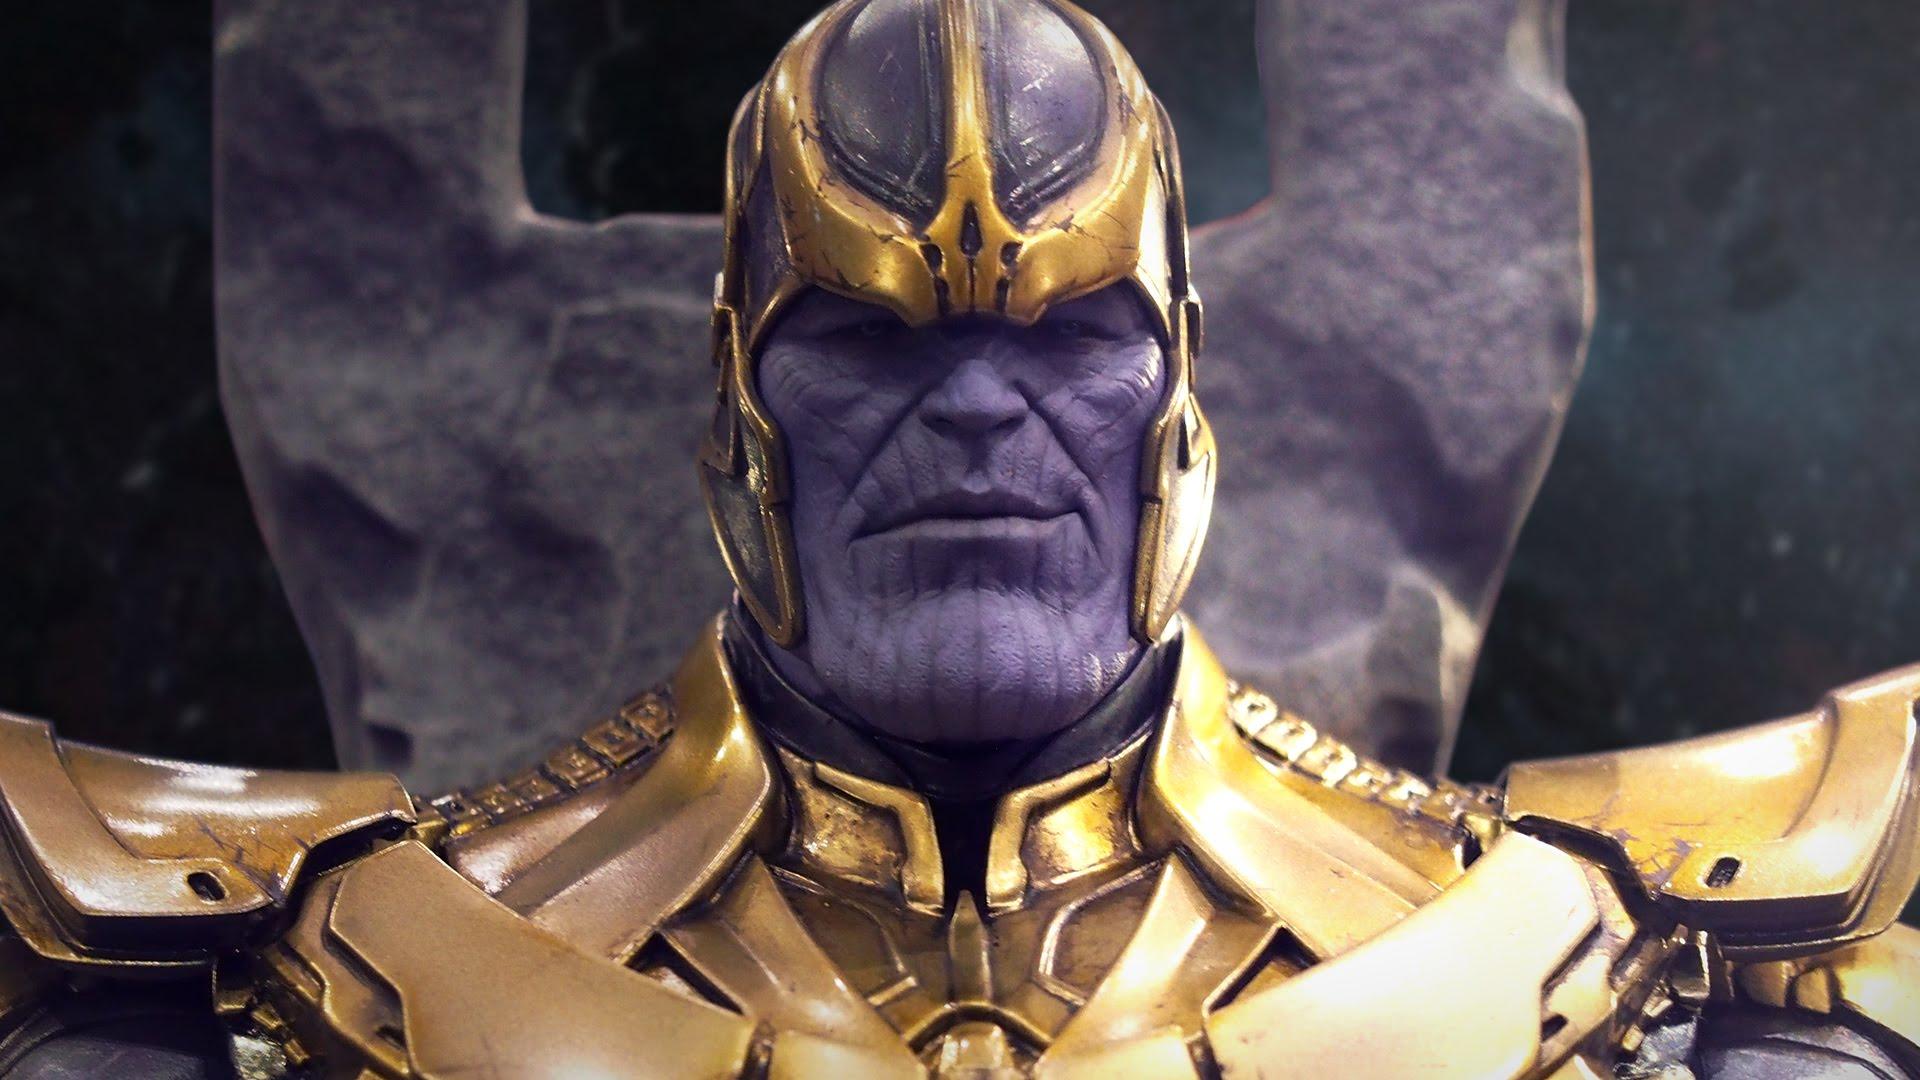 Avengers Infinity War : Thanos